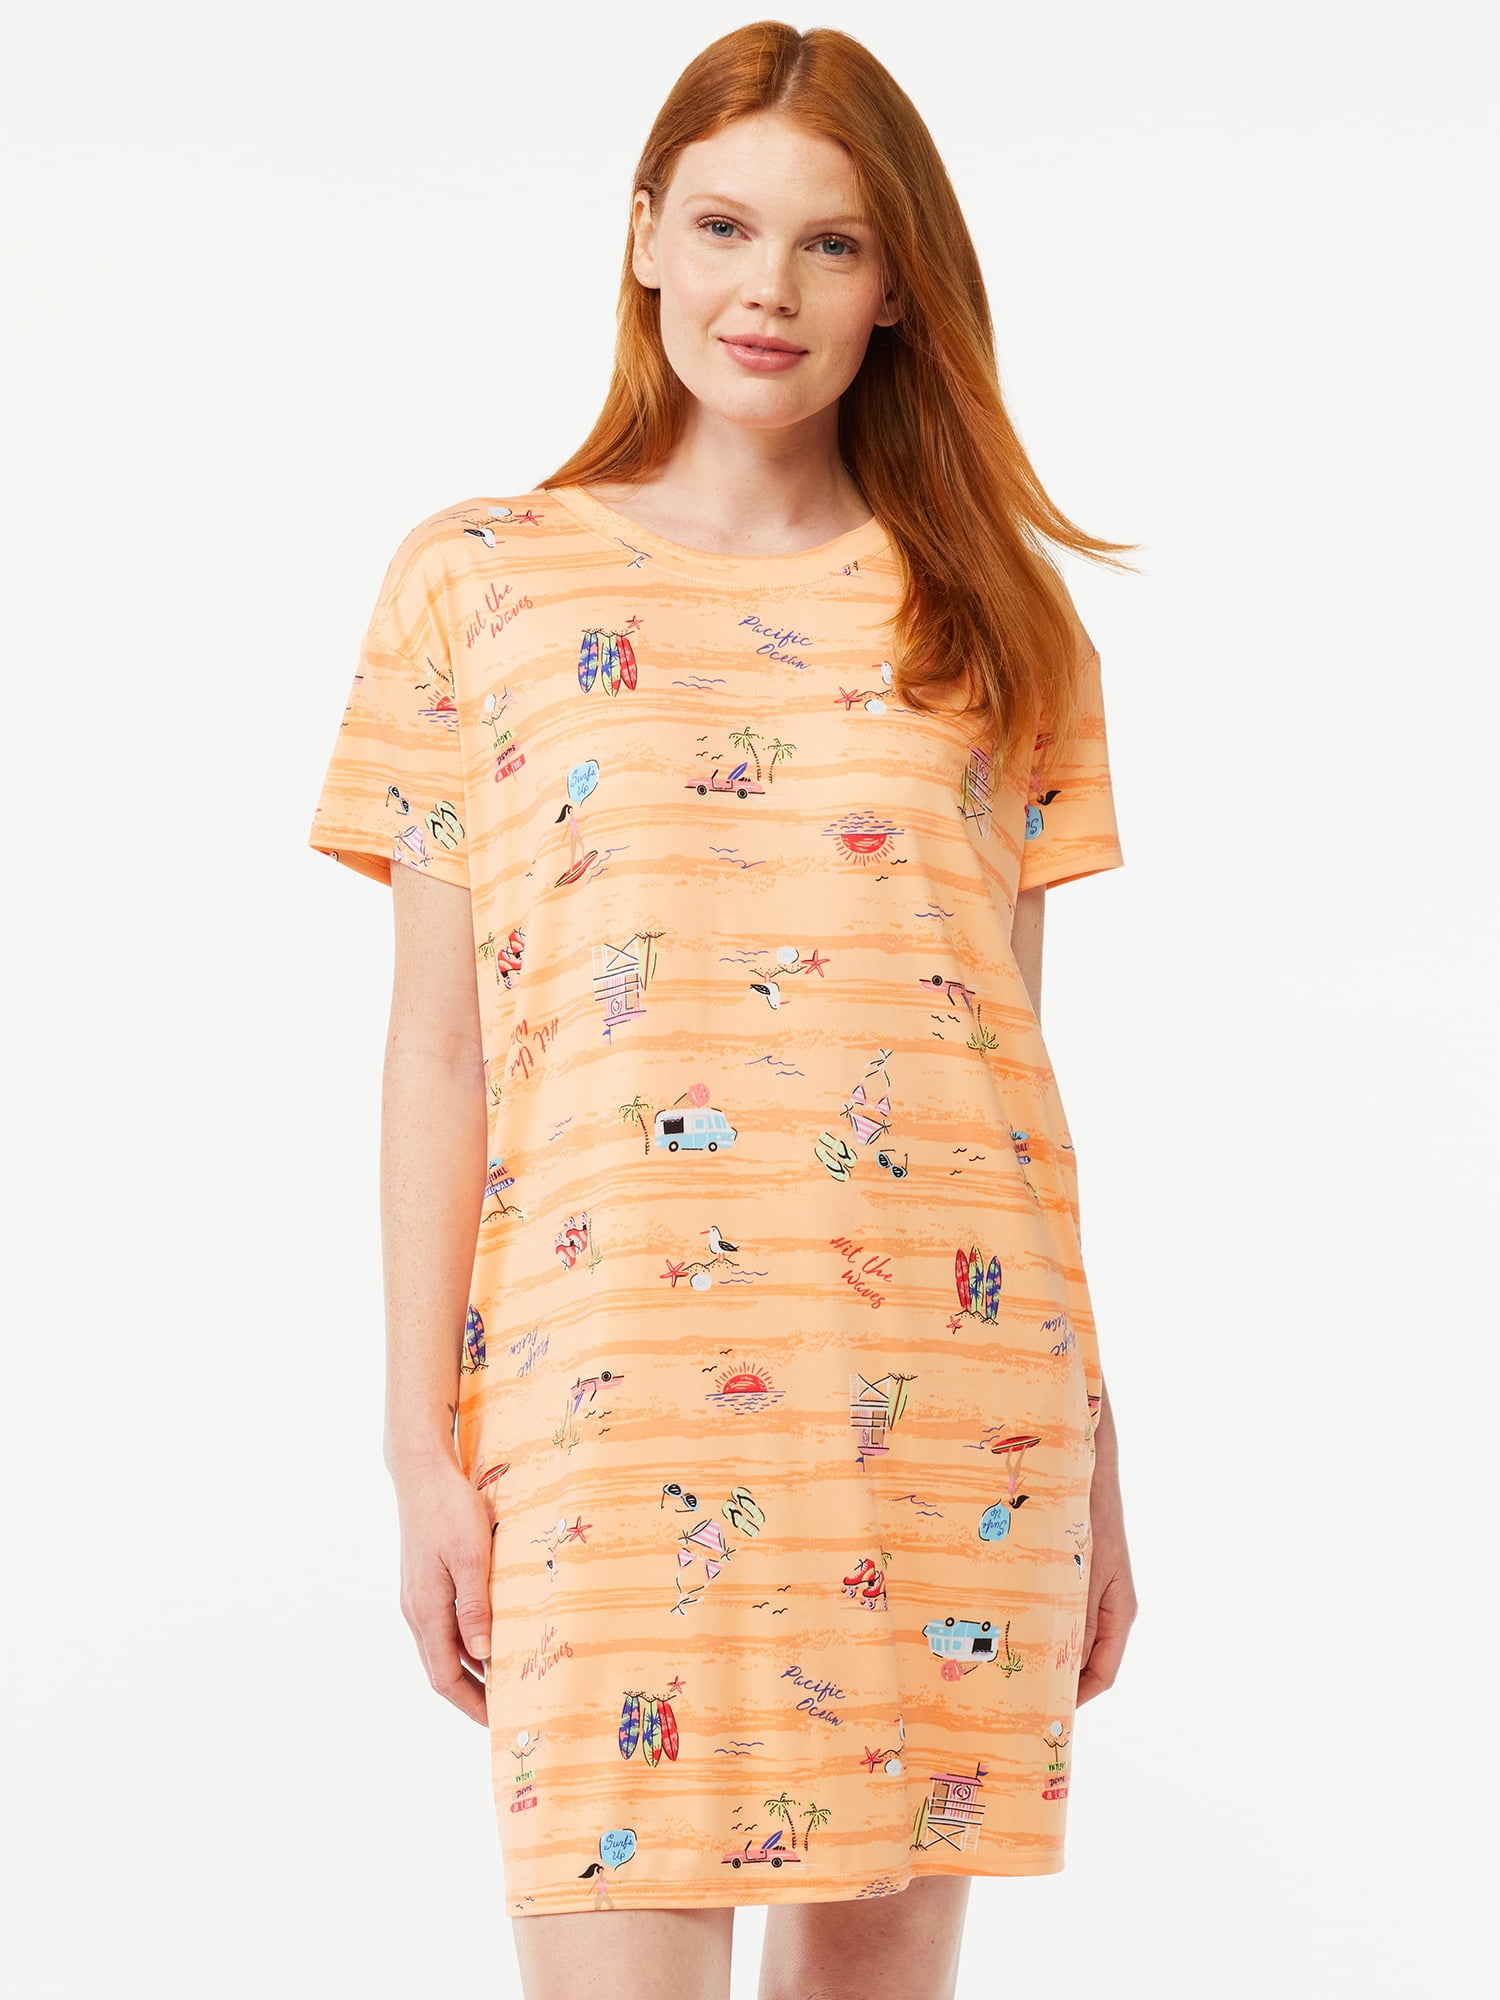 Joyspun Women's Short Sleeve Sleep Shirt, Sizes S/M to 2X/3X